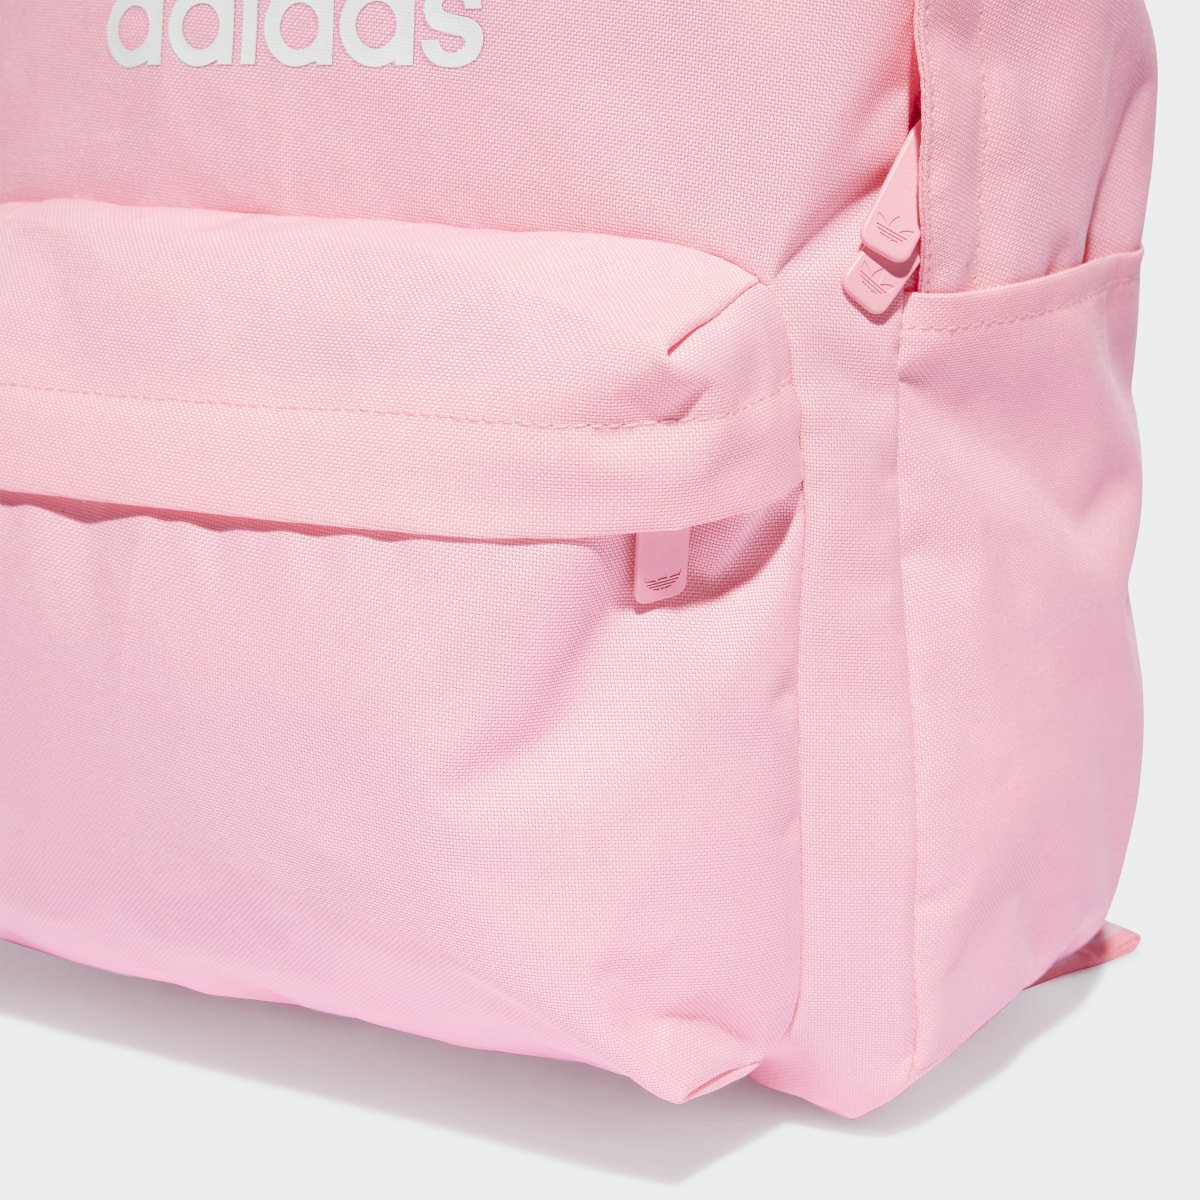 Adidas Adicolor Backpack. 7